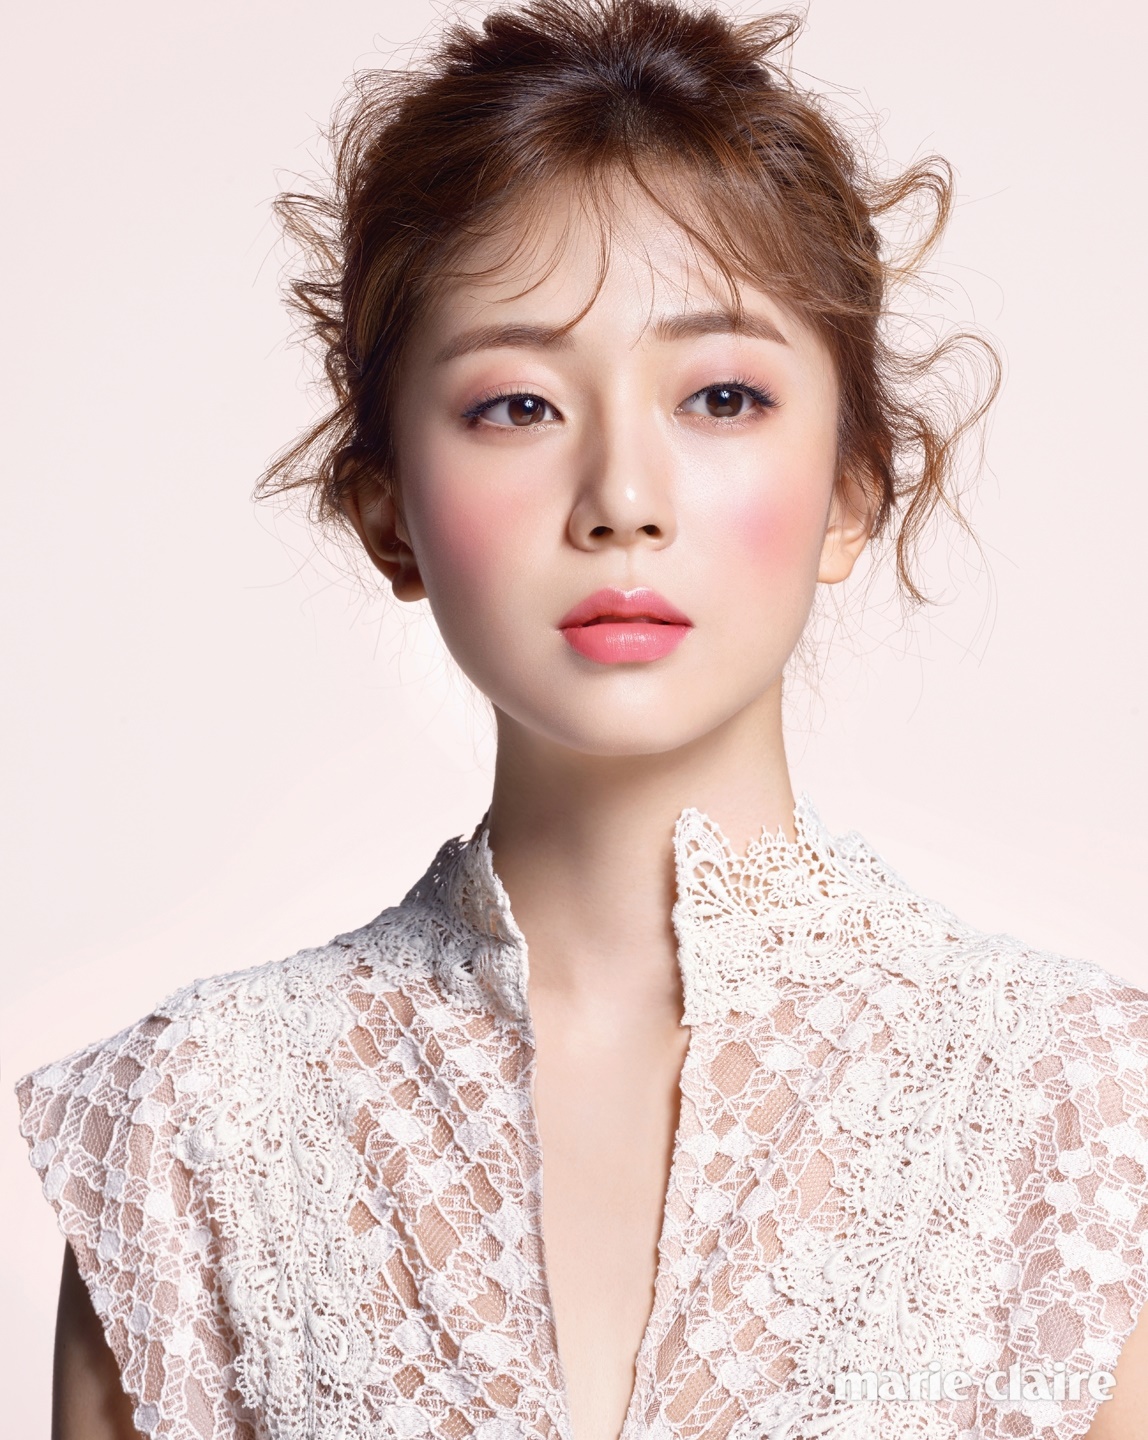 baek-jin-hee-marieclaire-korea-feb-2017-issue-kceleb-com